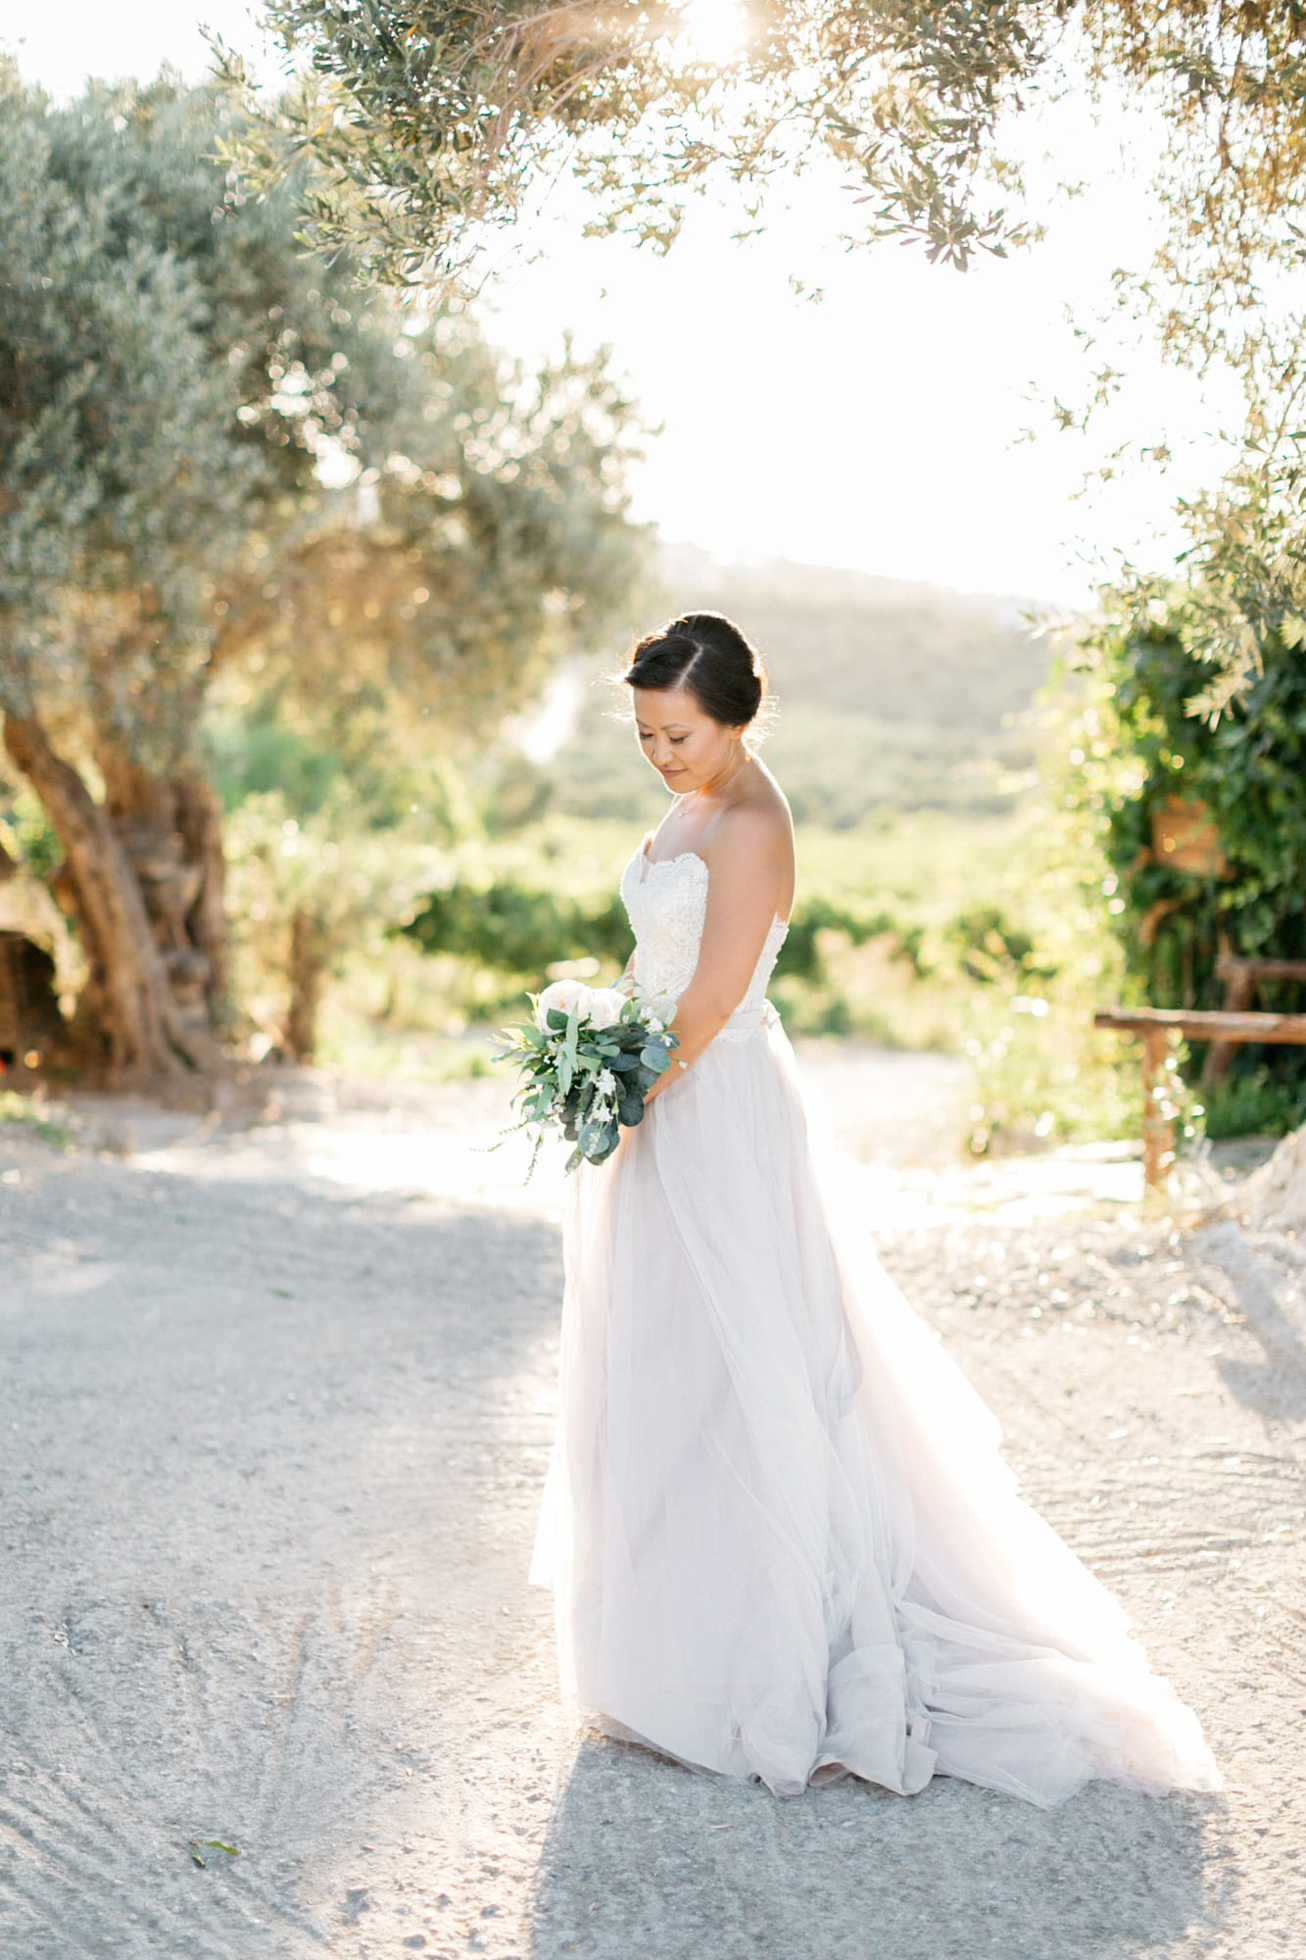 Elegant bride at her destination wedding in Agreco Farms, Grecotel, Crete, Greece.